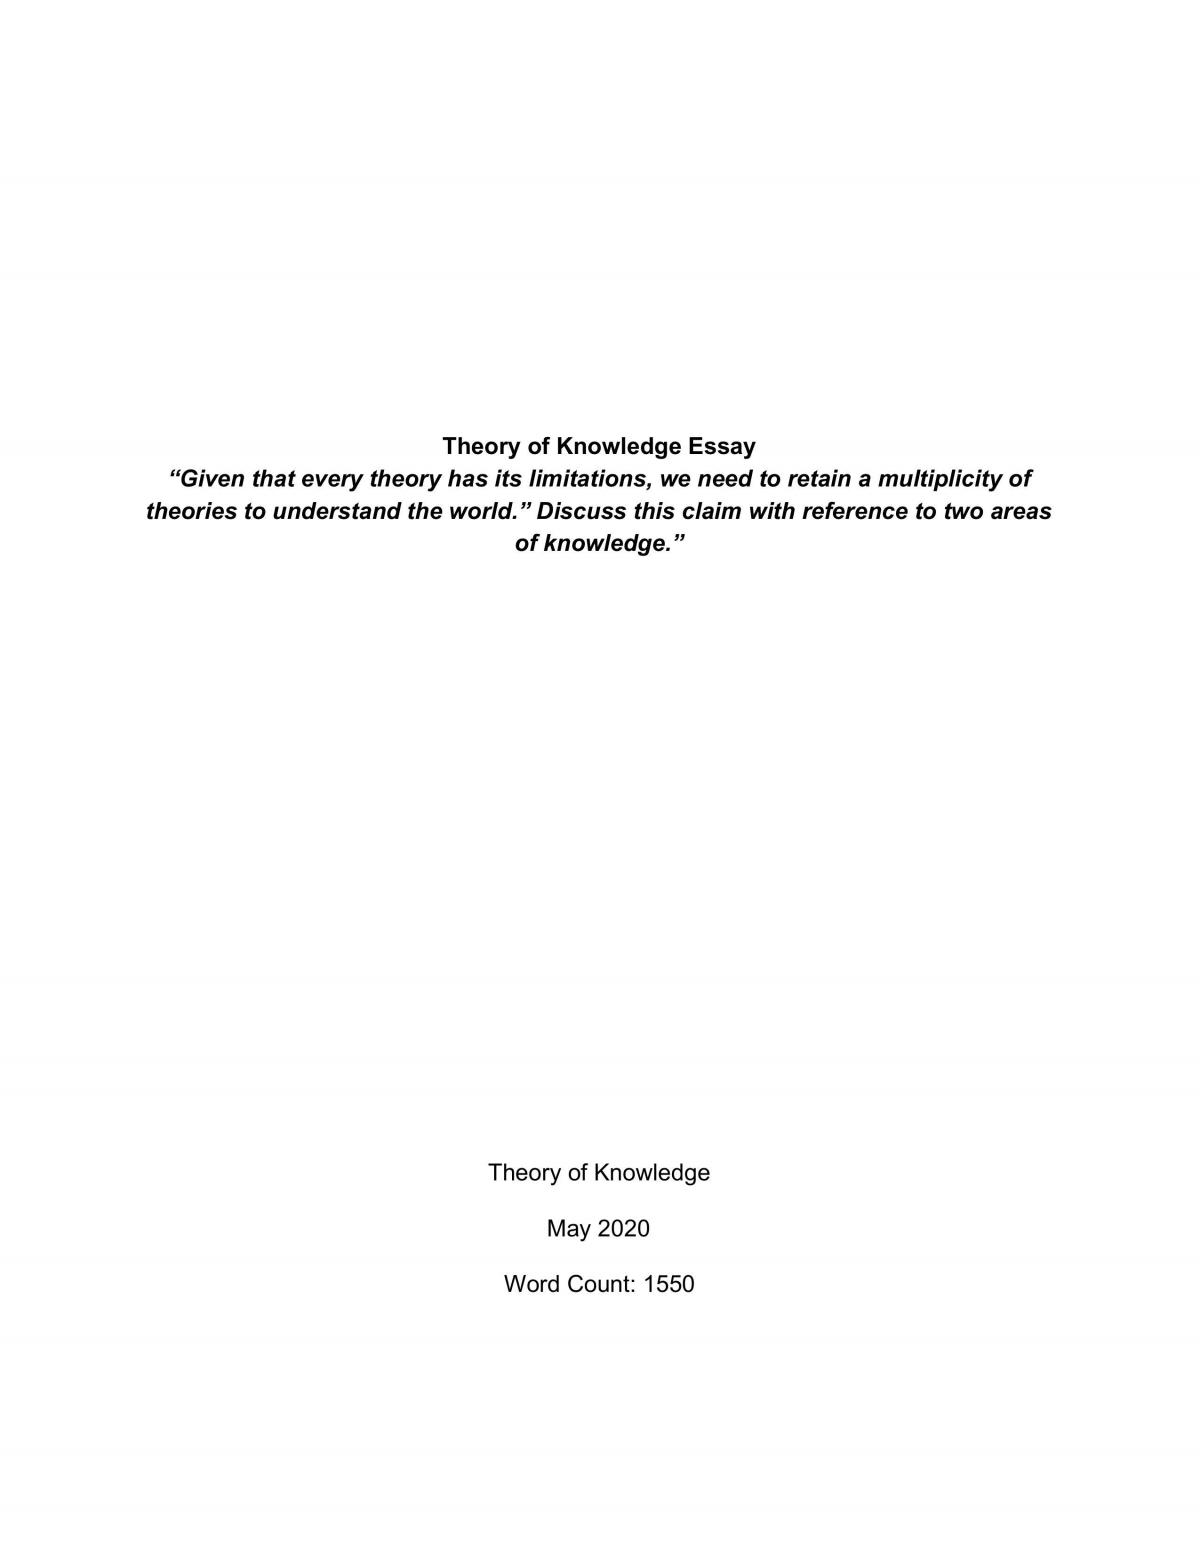 tok essay thesis example